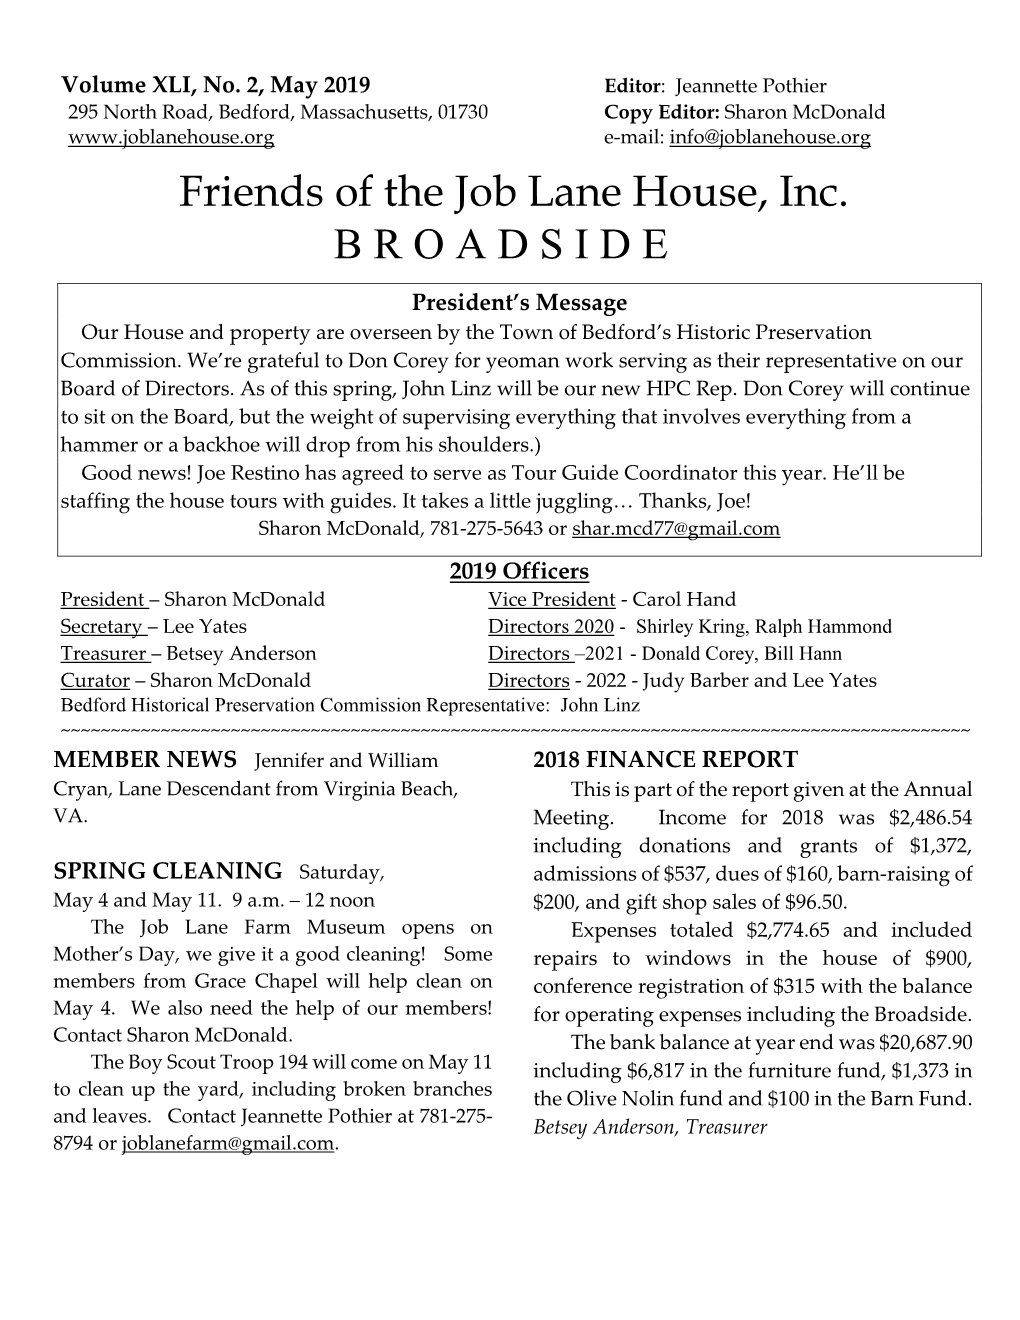 Friends of the Job Lane House, Inc